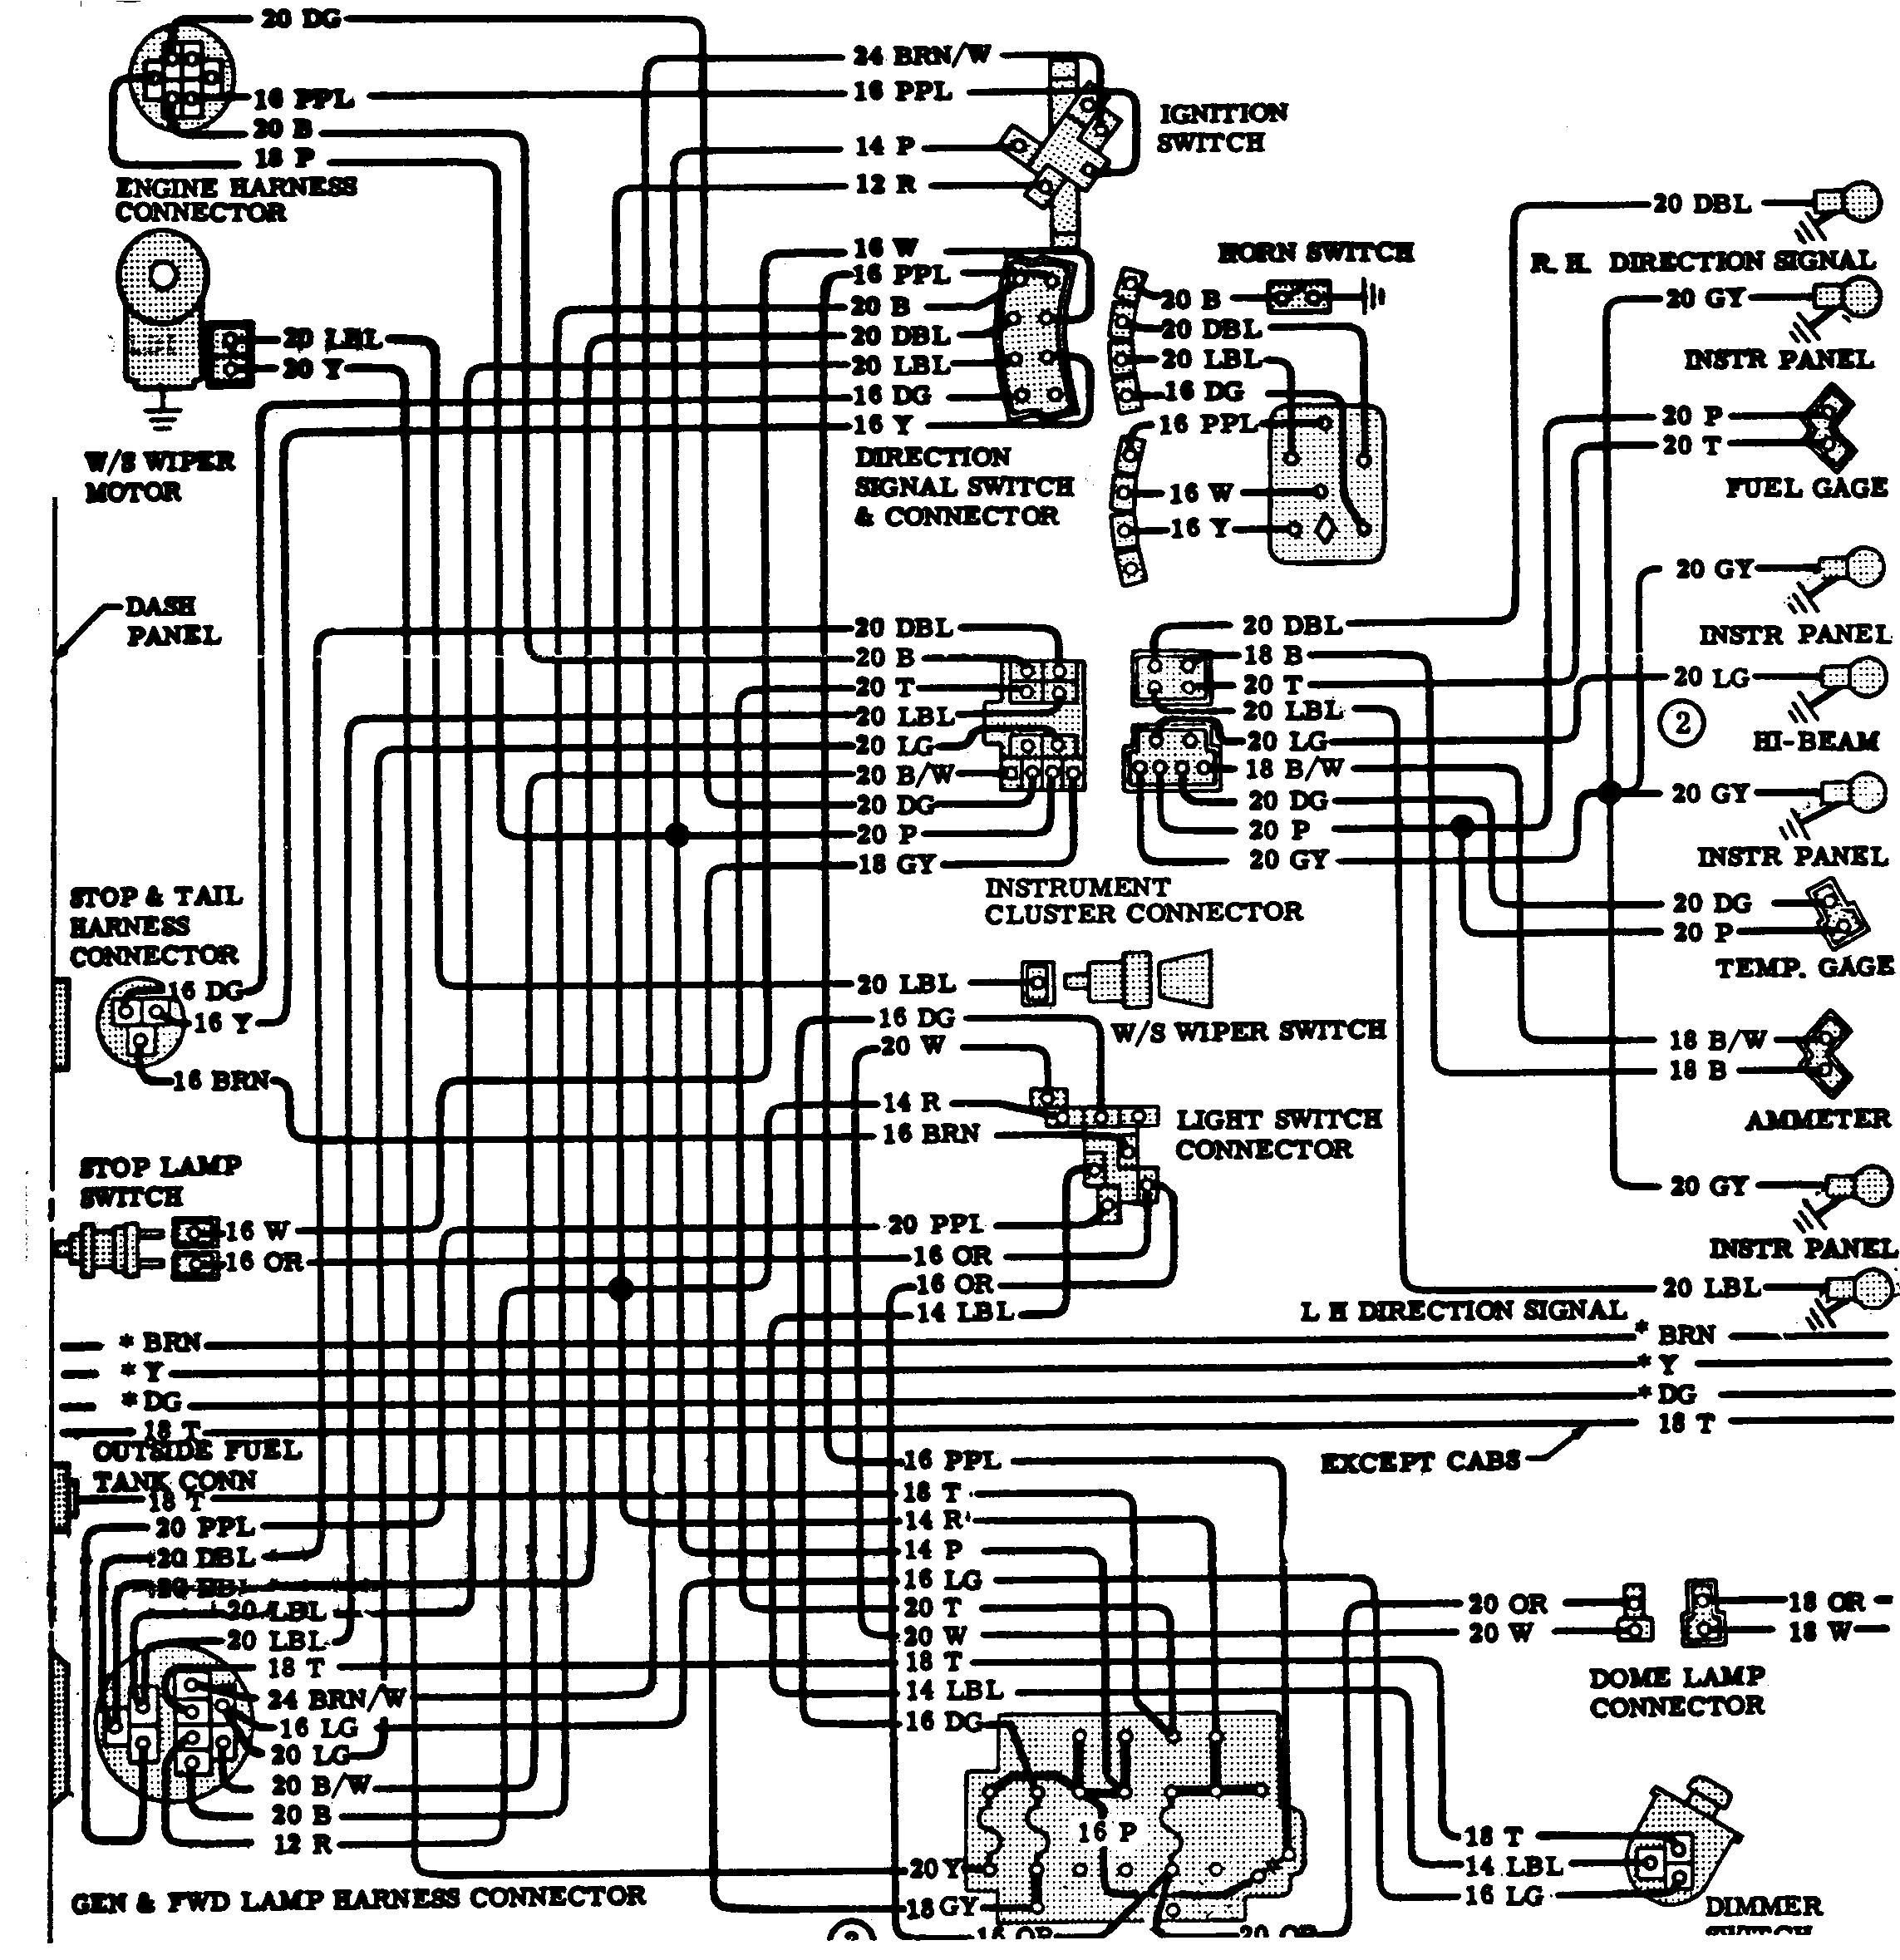 2004 Chevy Silverado Instrument Cluster Wiring Diagram Image Details